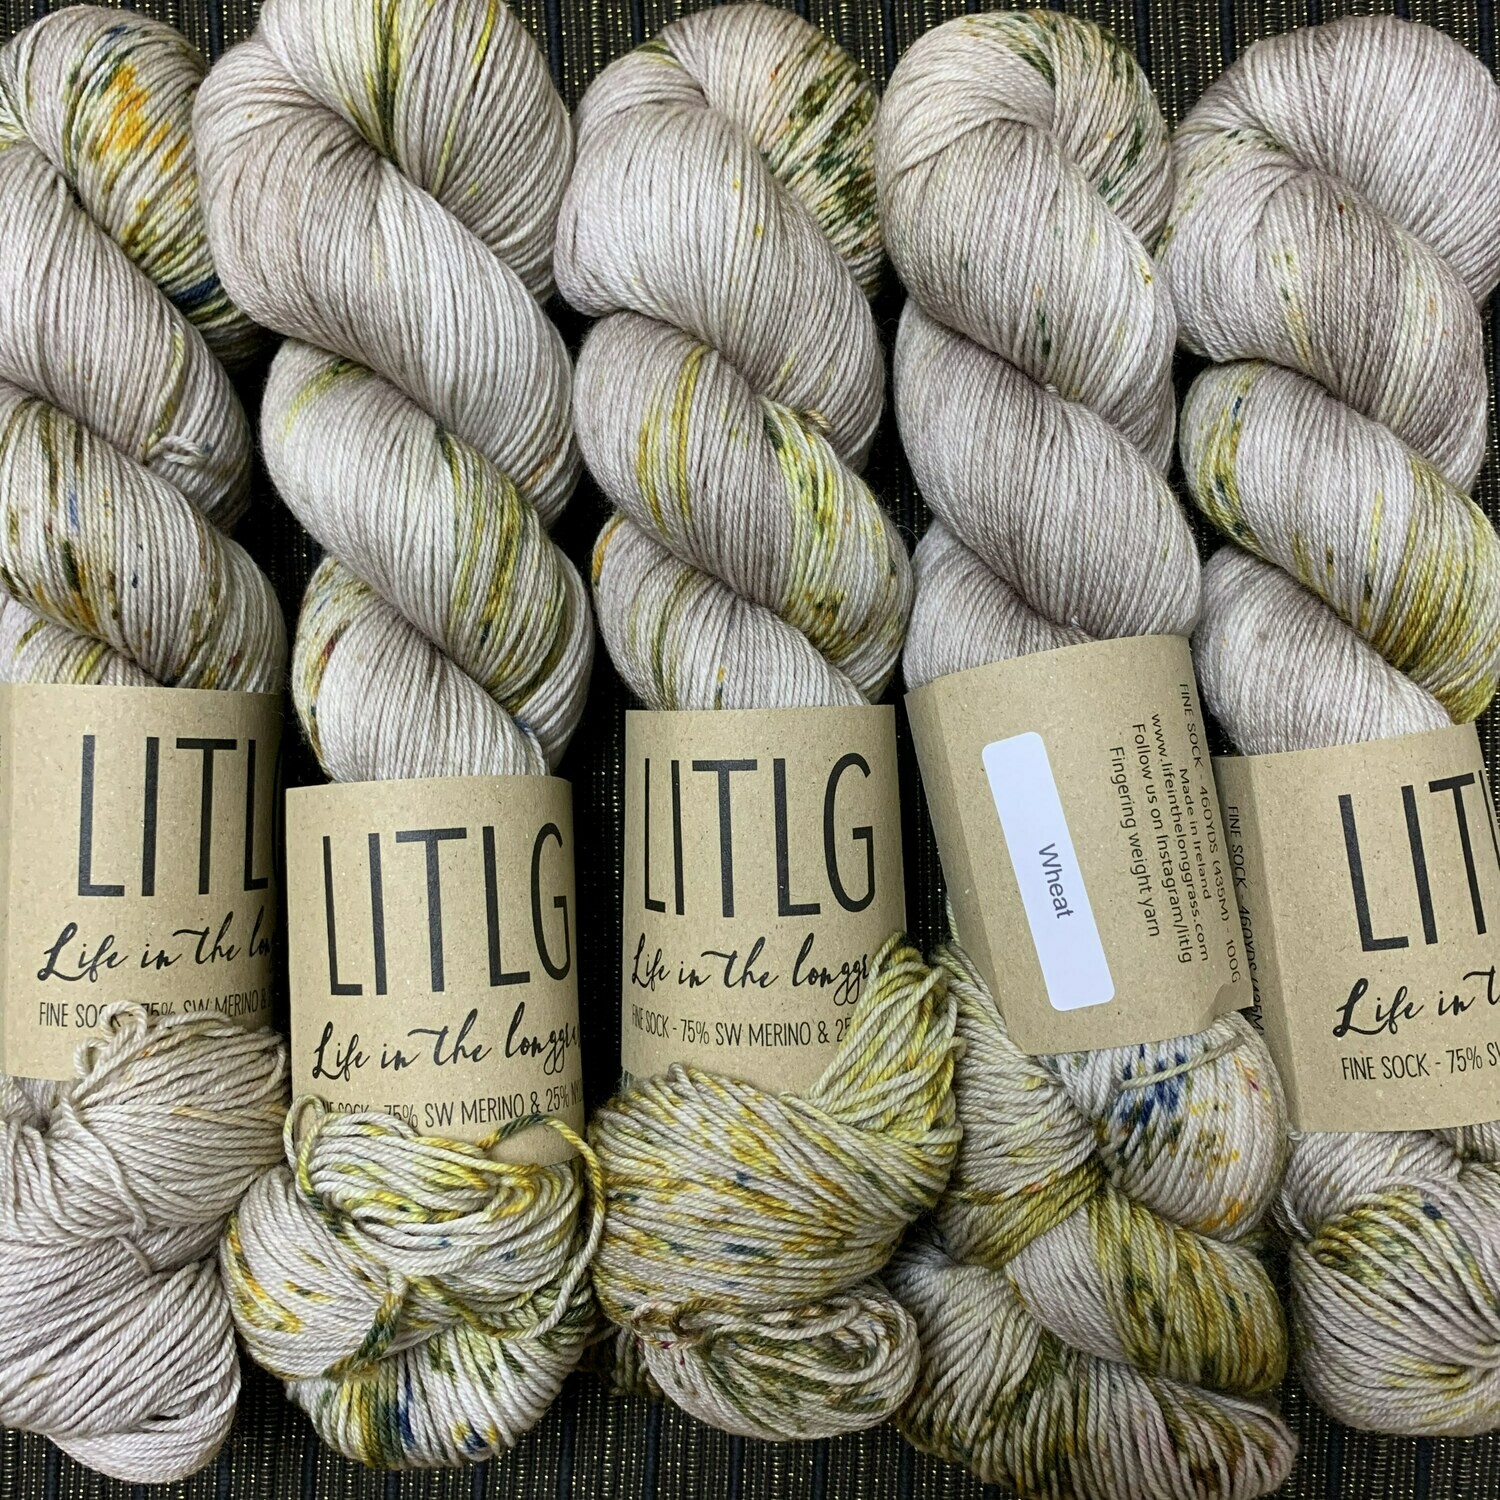 LITLG sock yarn Wheat